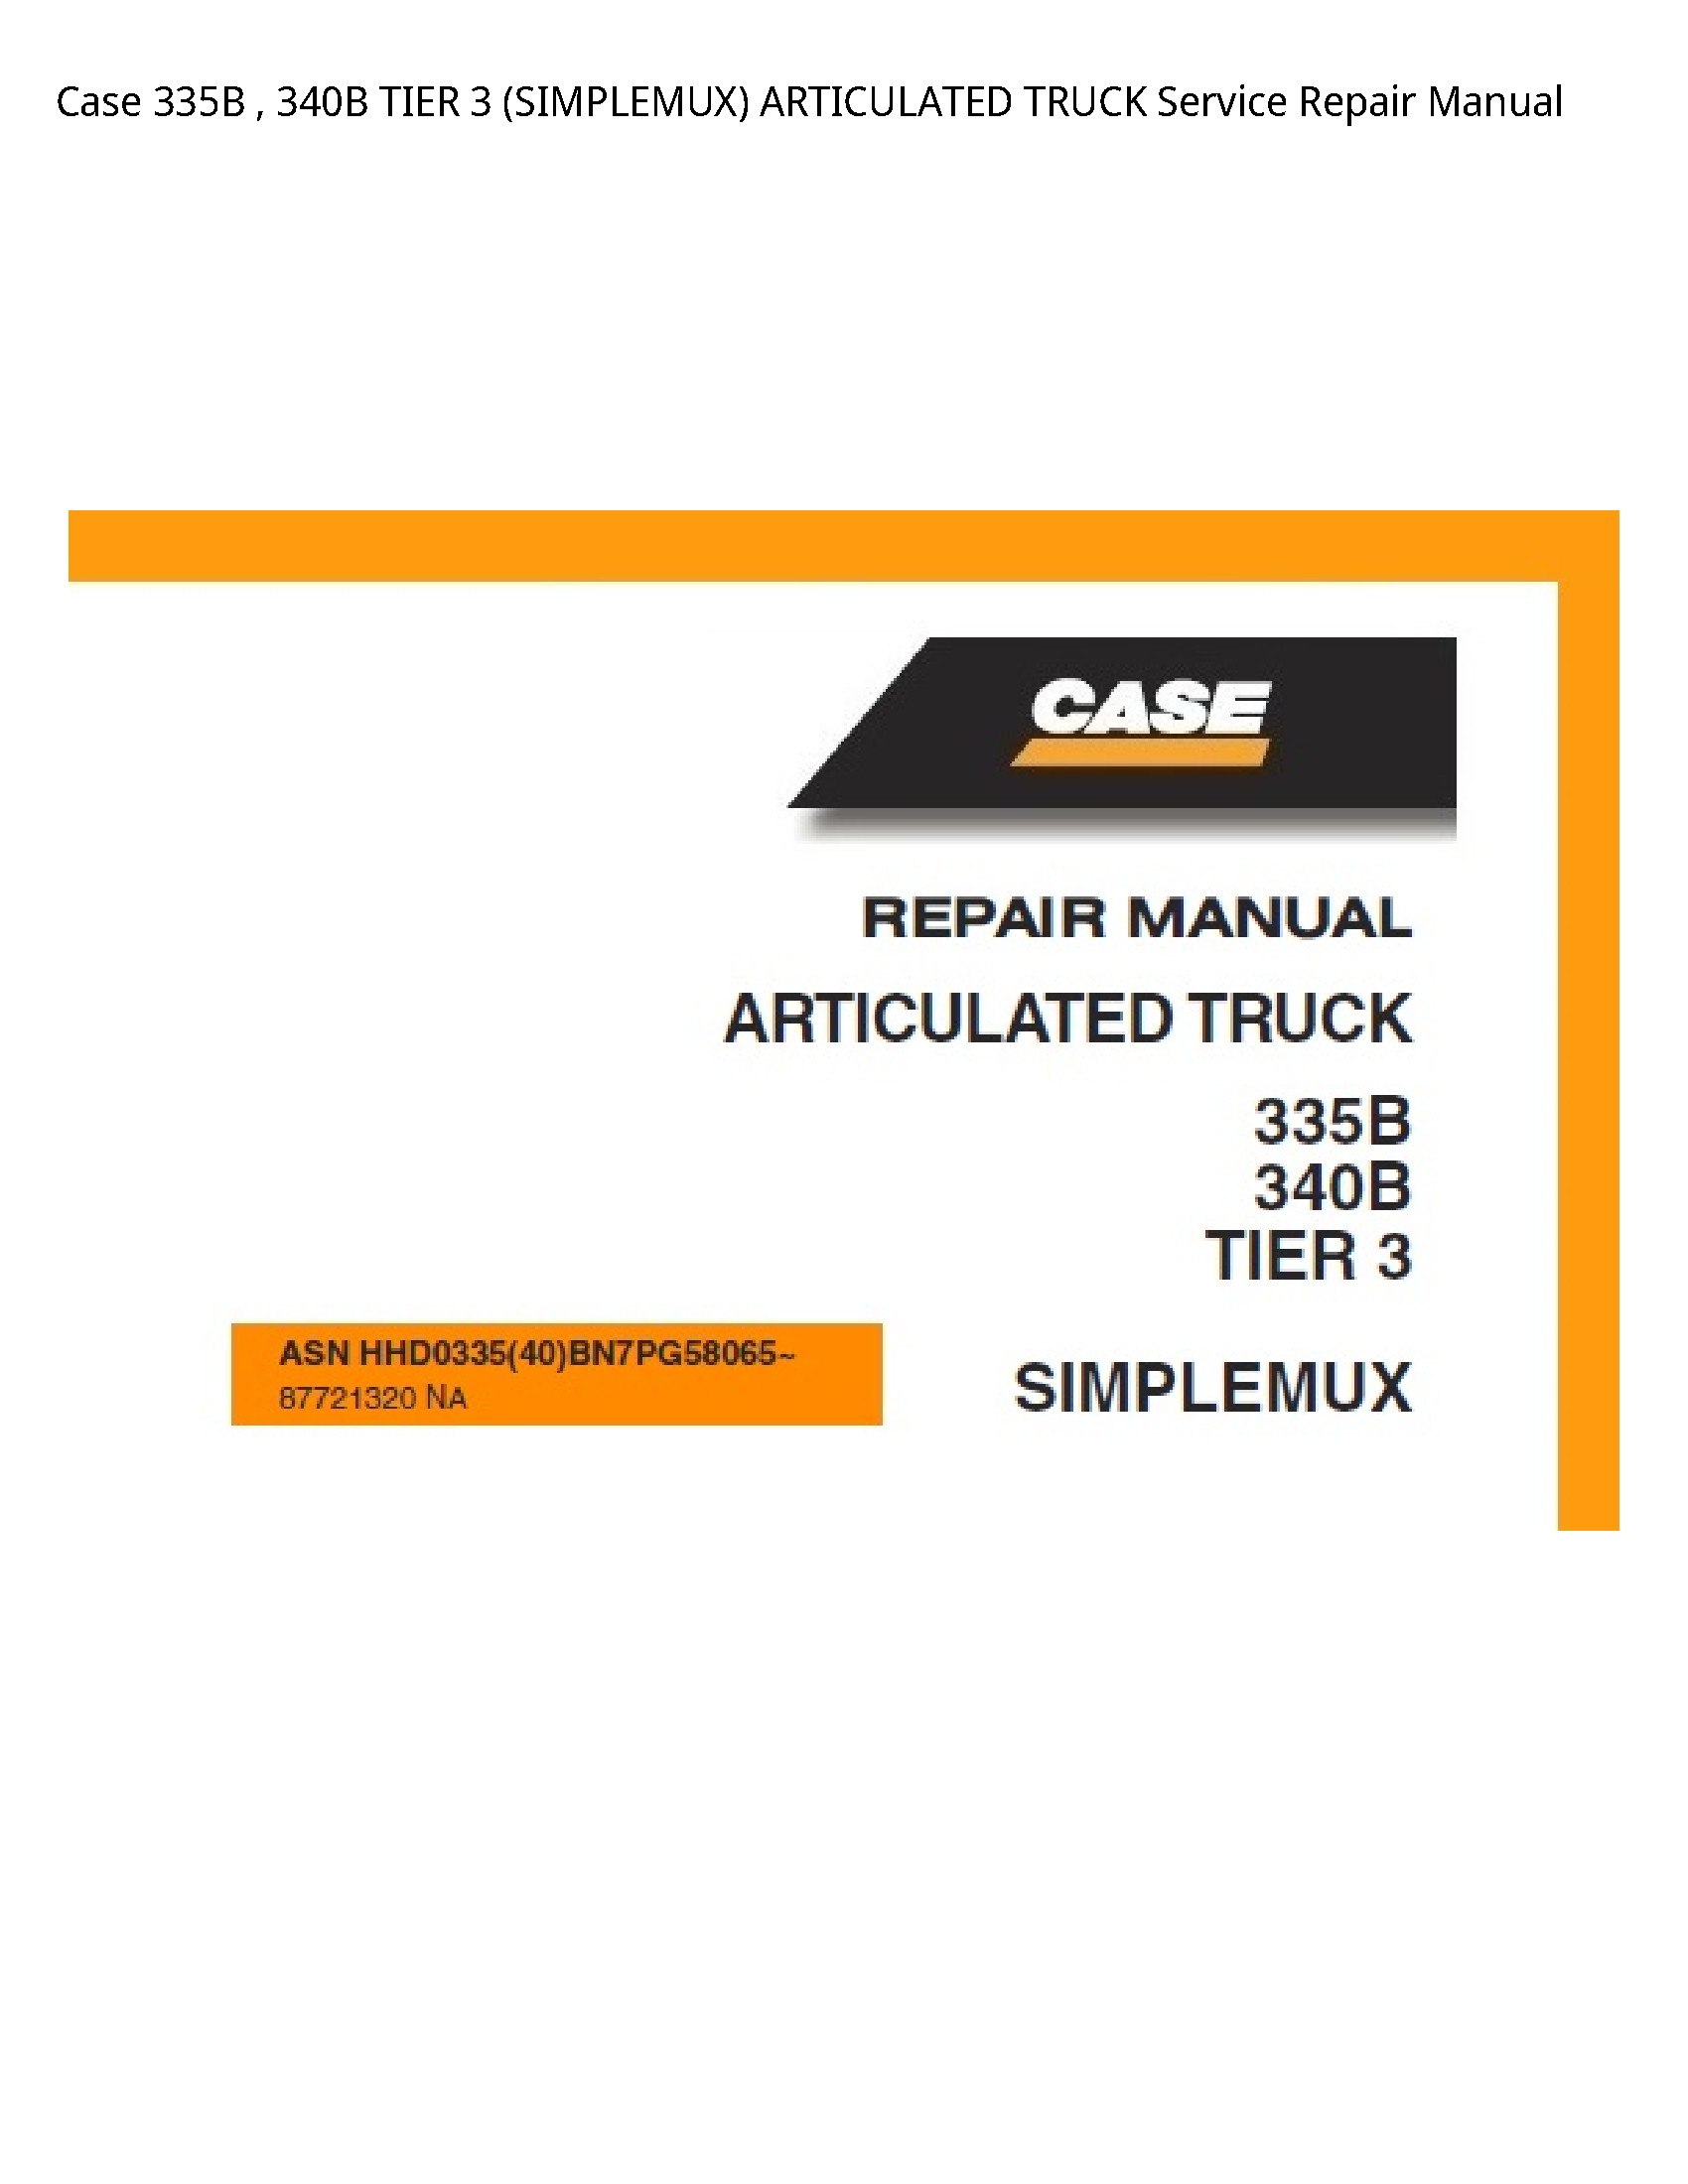 Case/Case IH 335B TIER (SIMPLEMUX) ARTICULATED TRUCK manual